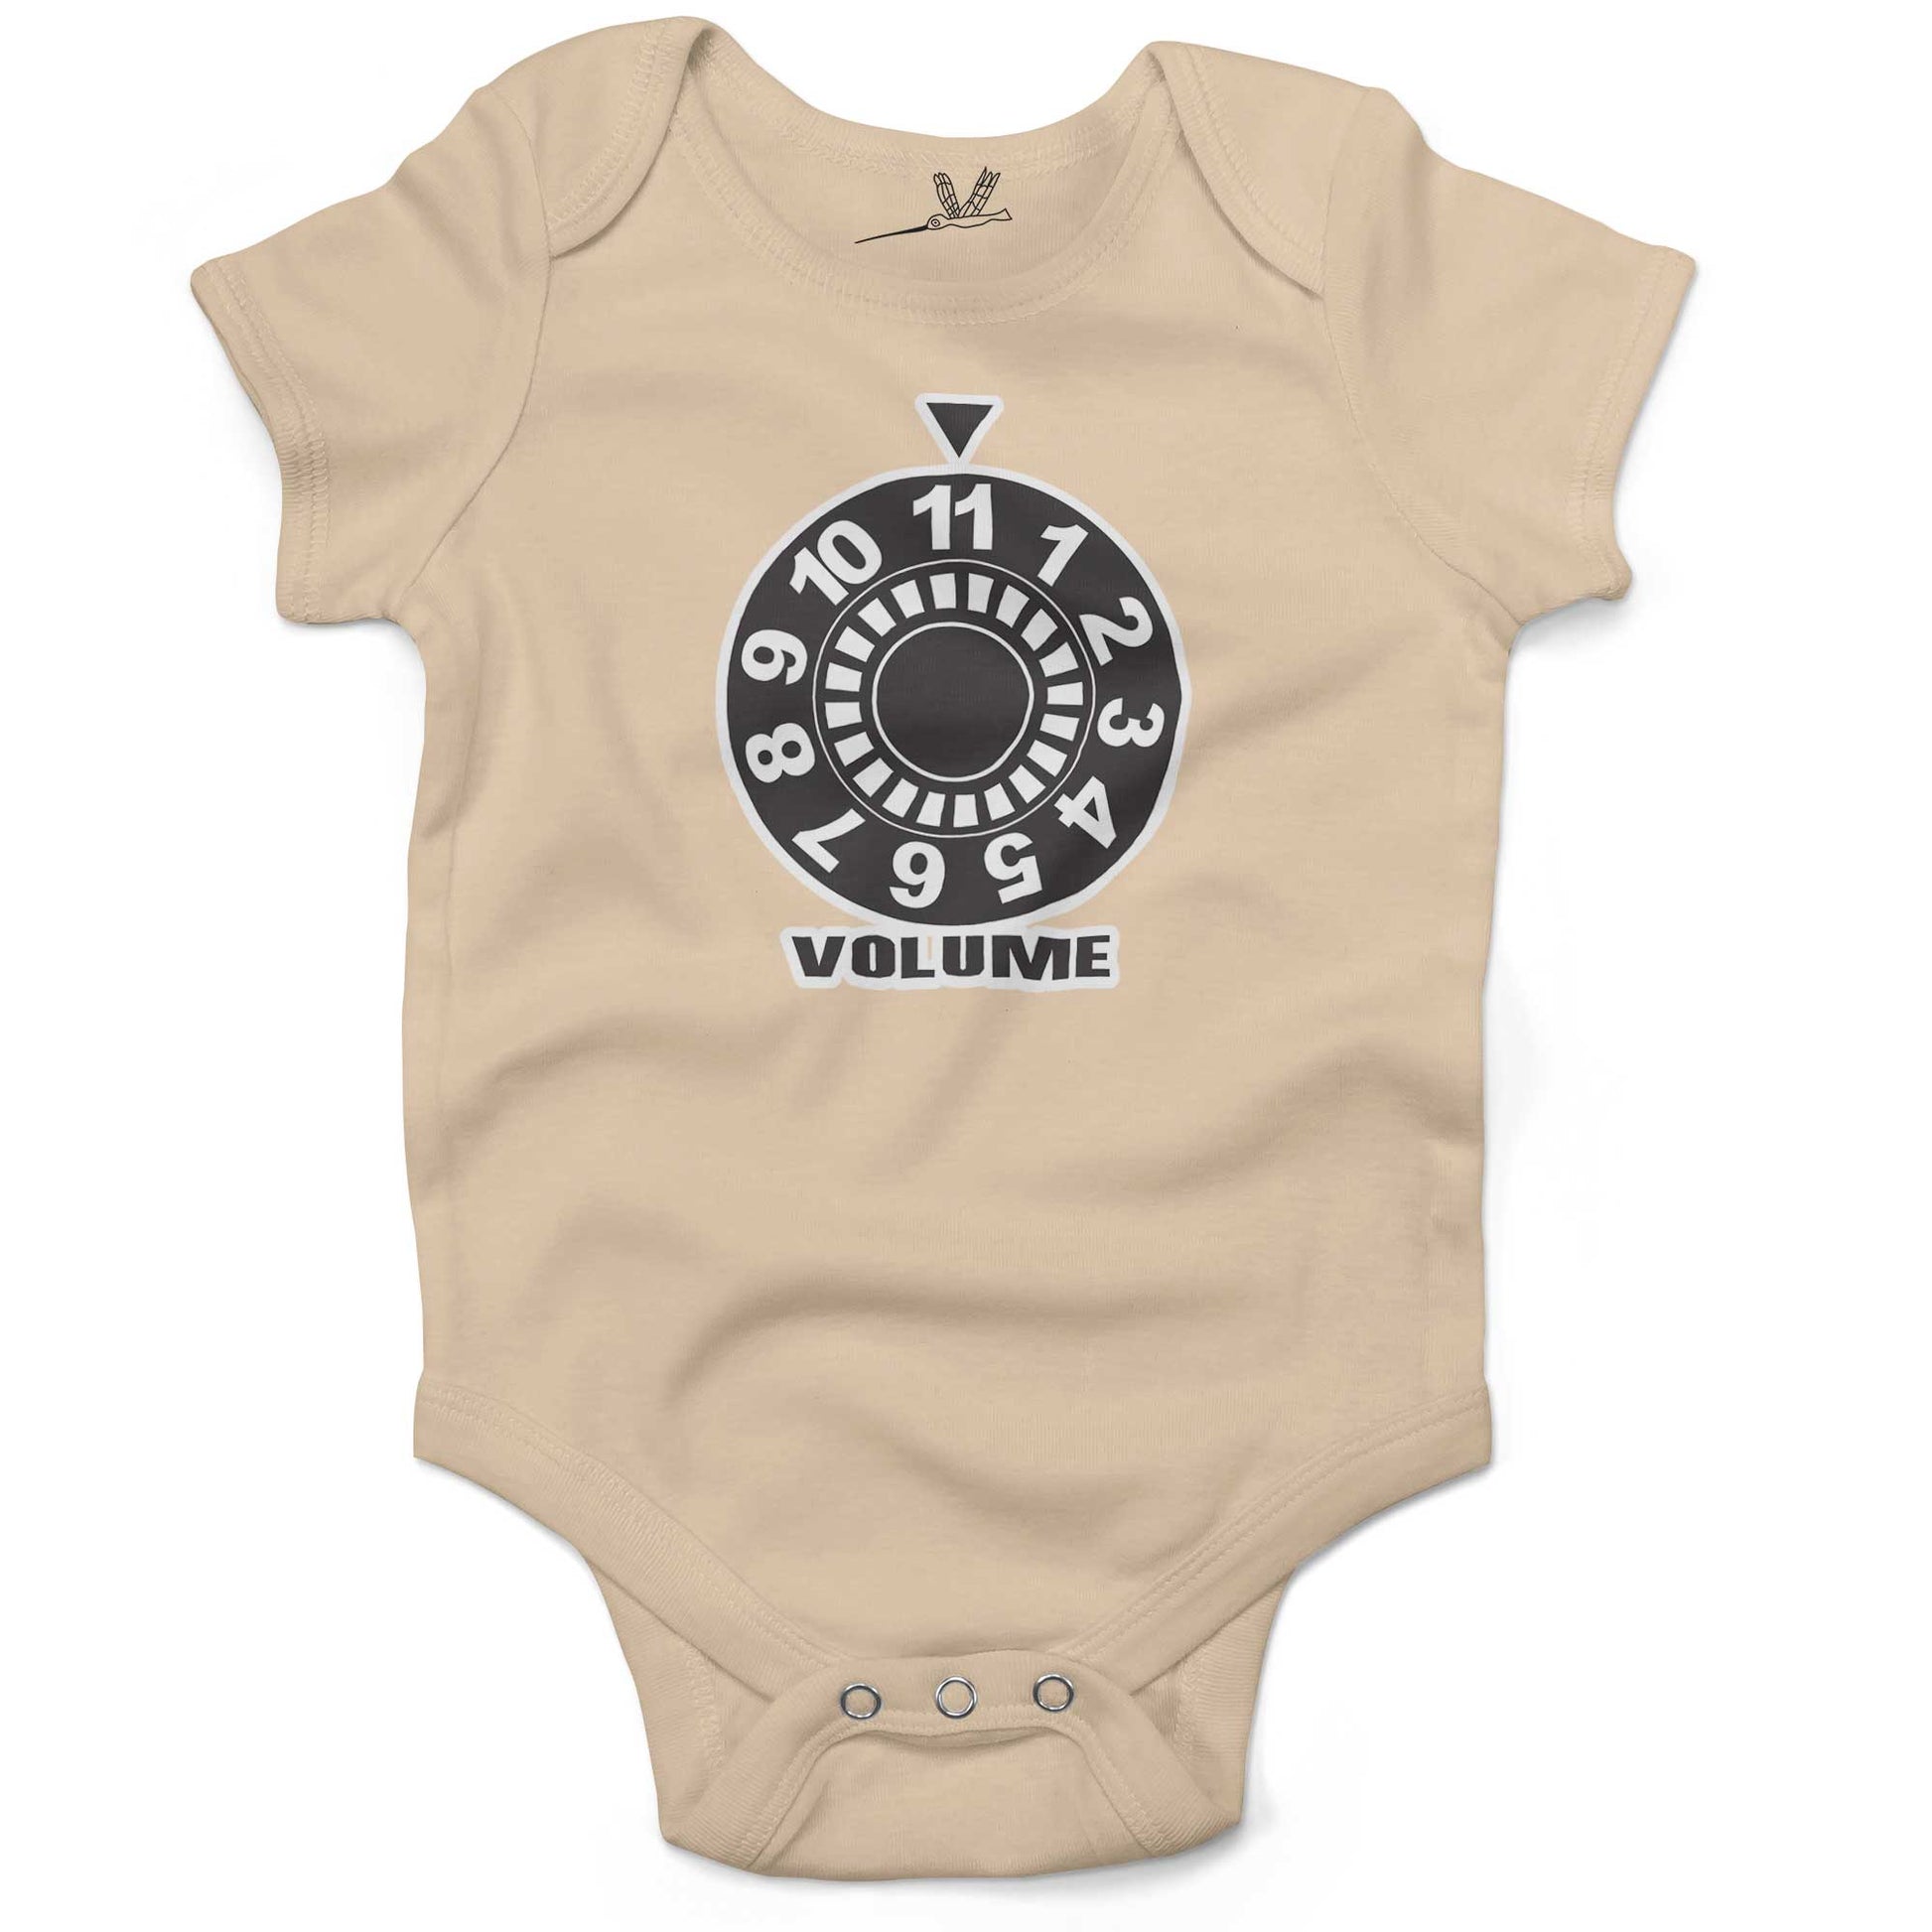 Turn It Up To 11 Infant Bodysuit or Raglan Baby Tee-Organic Natural-3-6 months